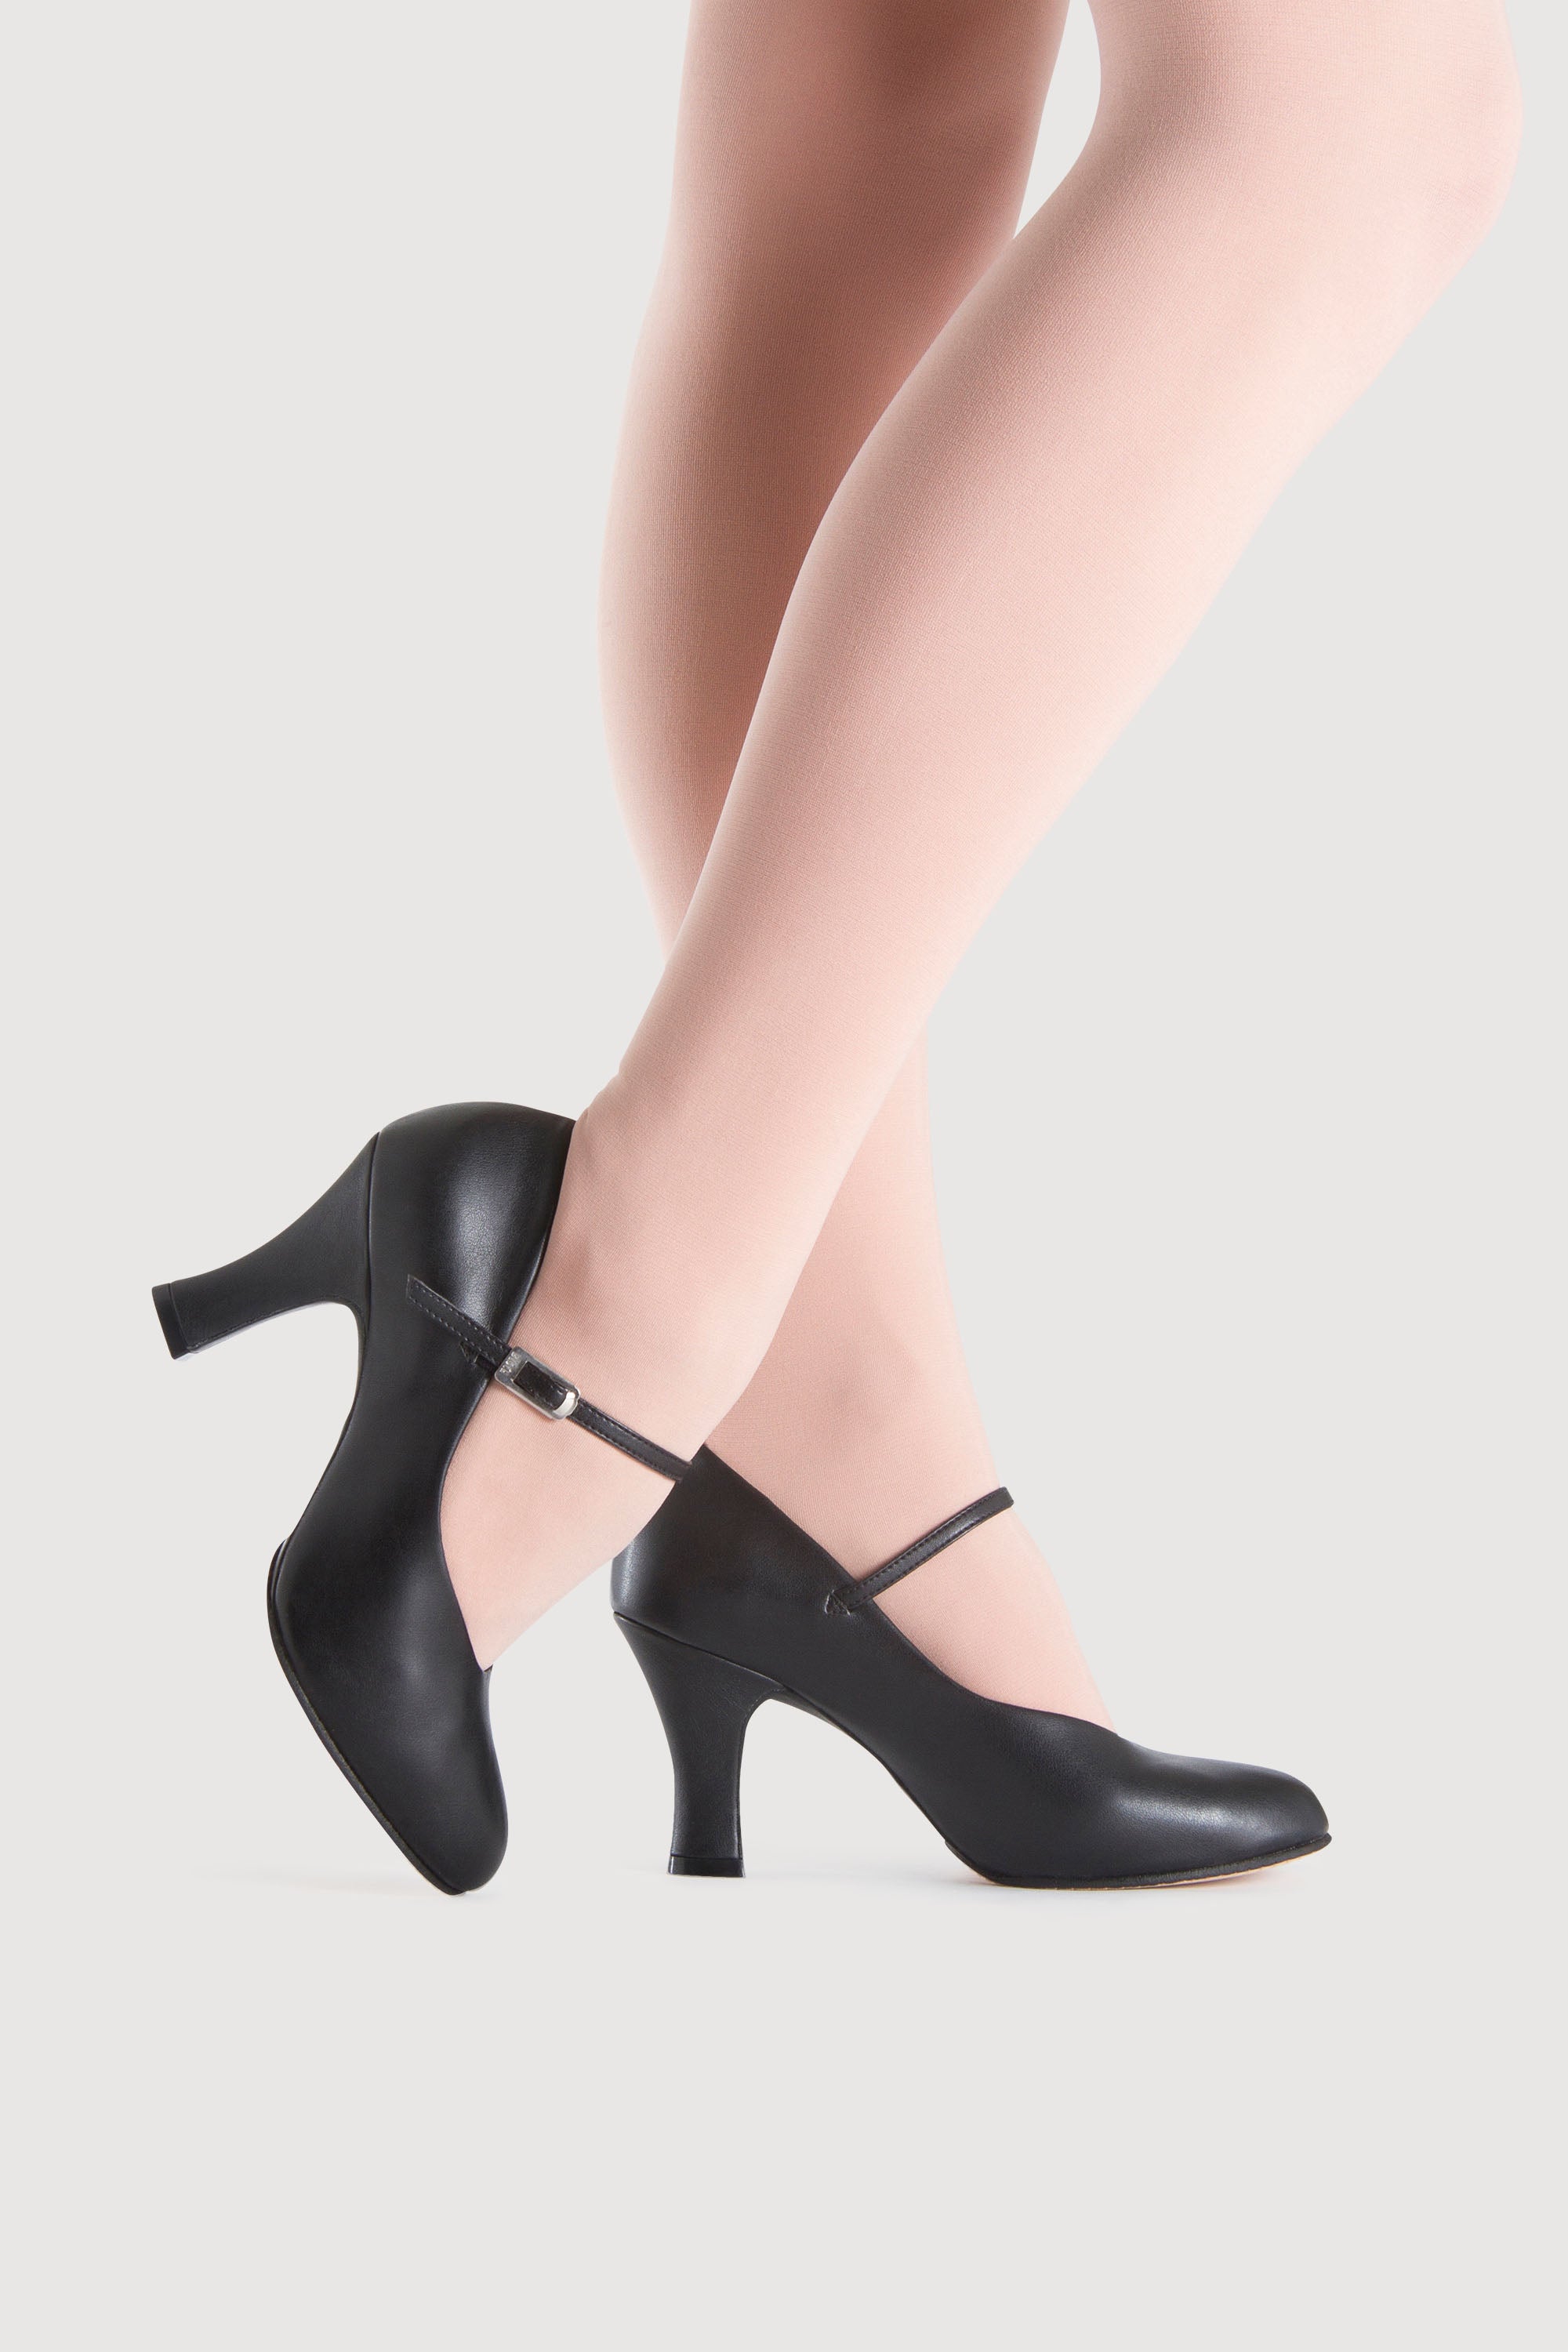 Black High Heels Women Pointed Toe Stiletto Heel Pumps Dress Shoes -  Milanoo.com